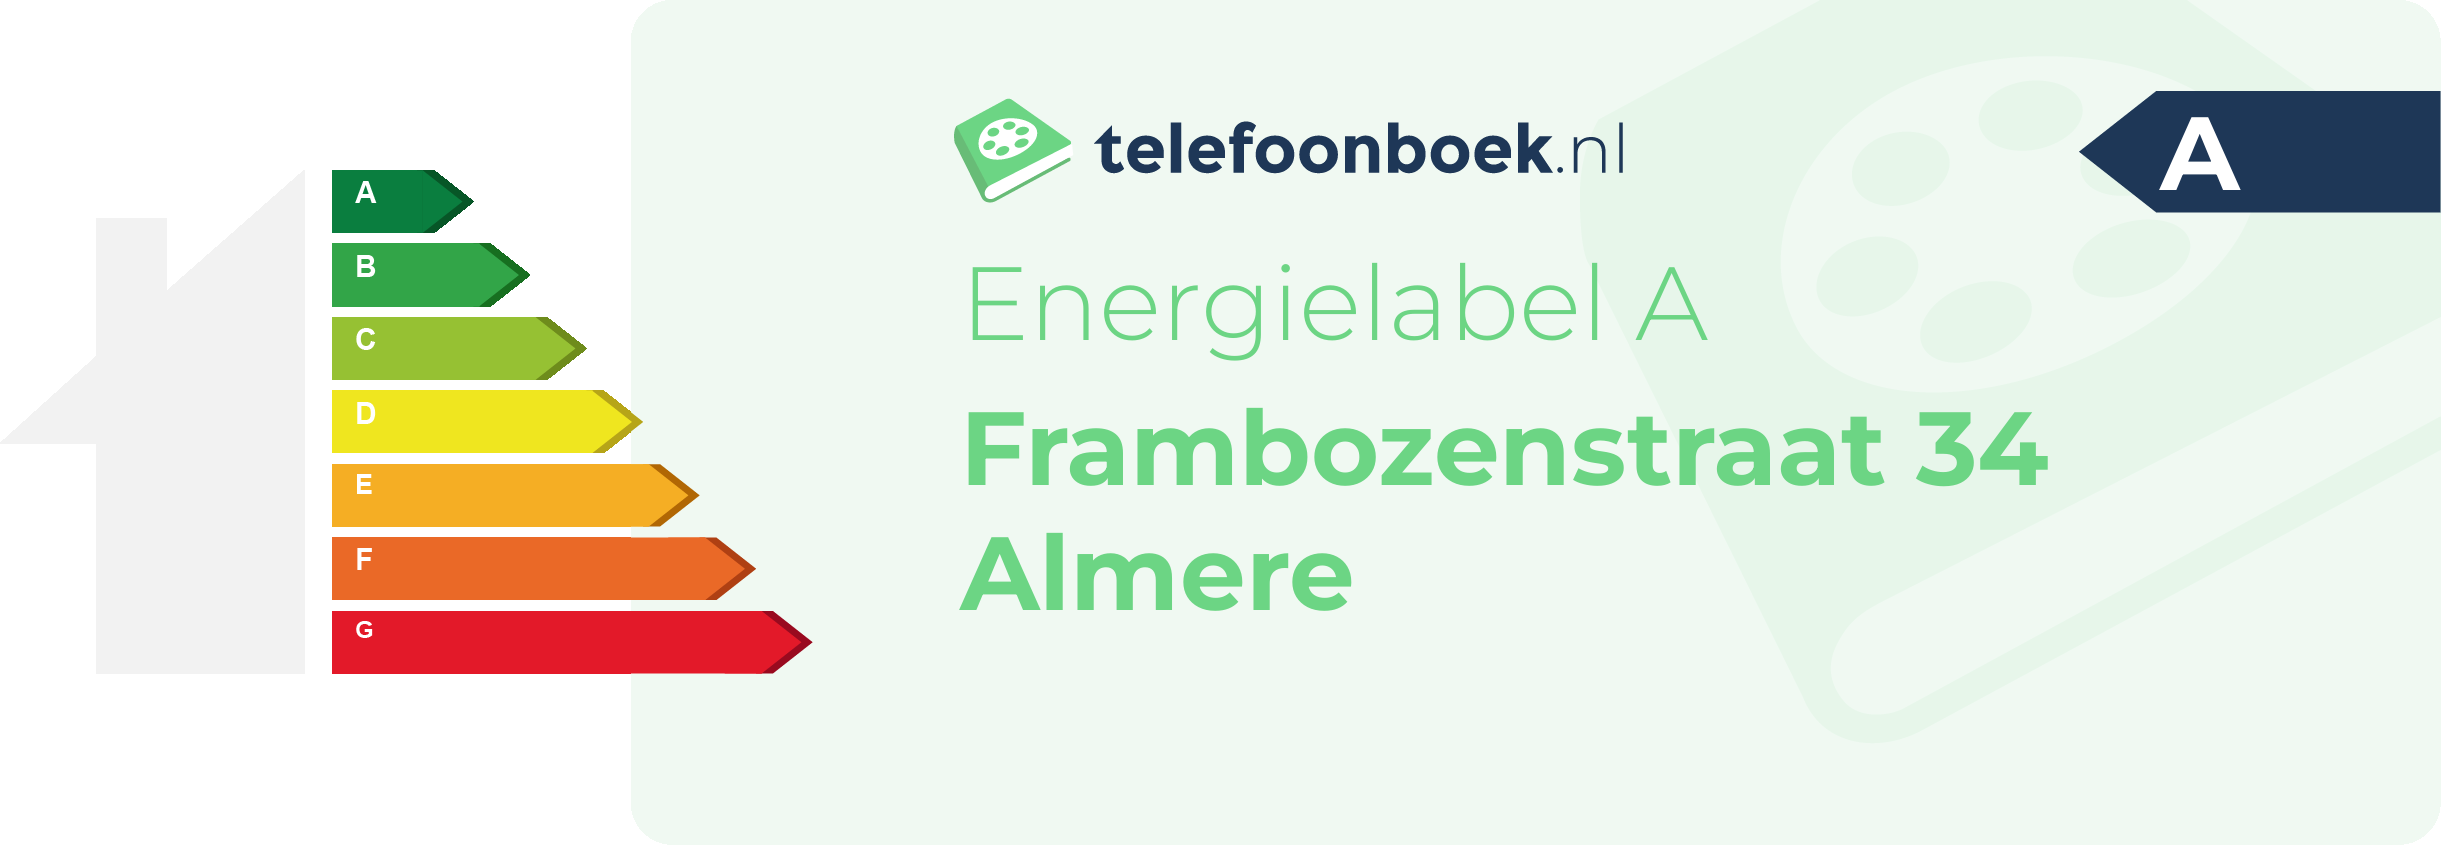 Energielabel Frambozenstraat 34 Almere